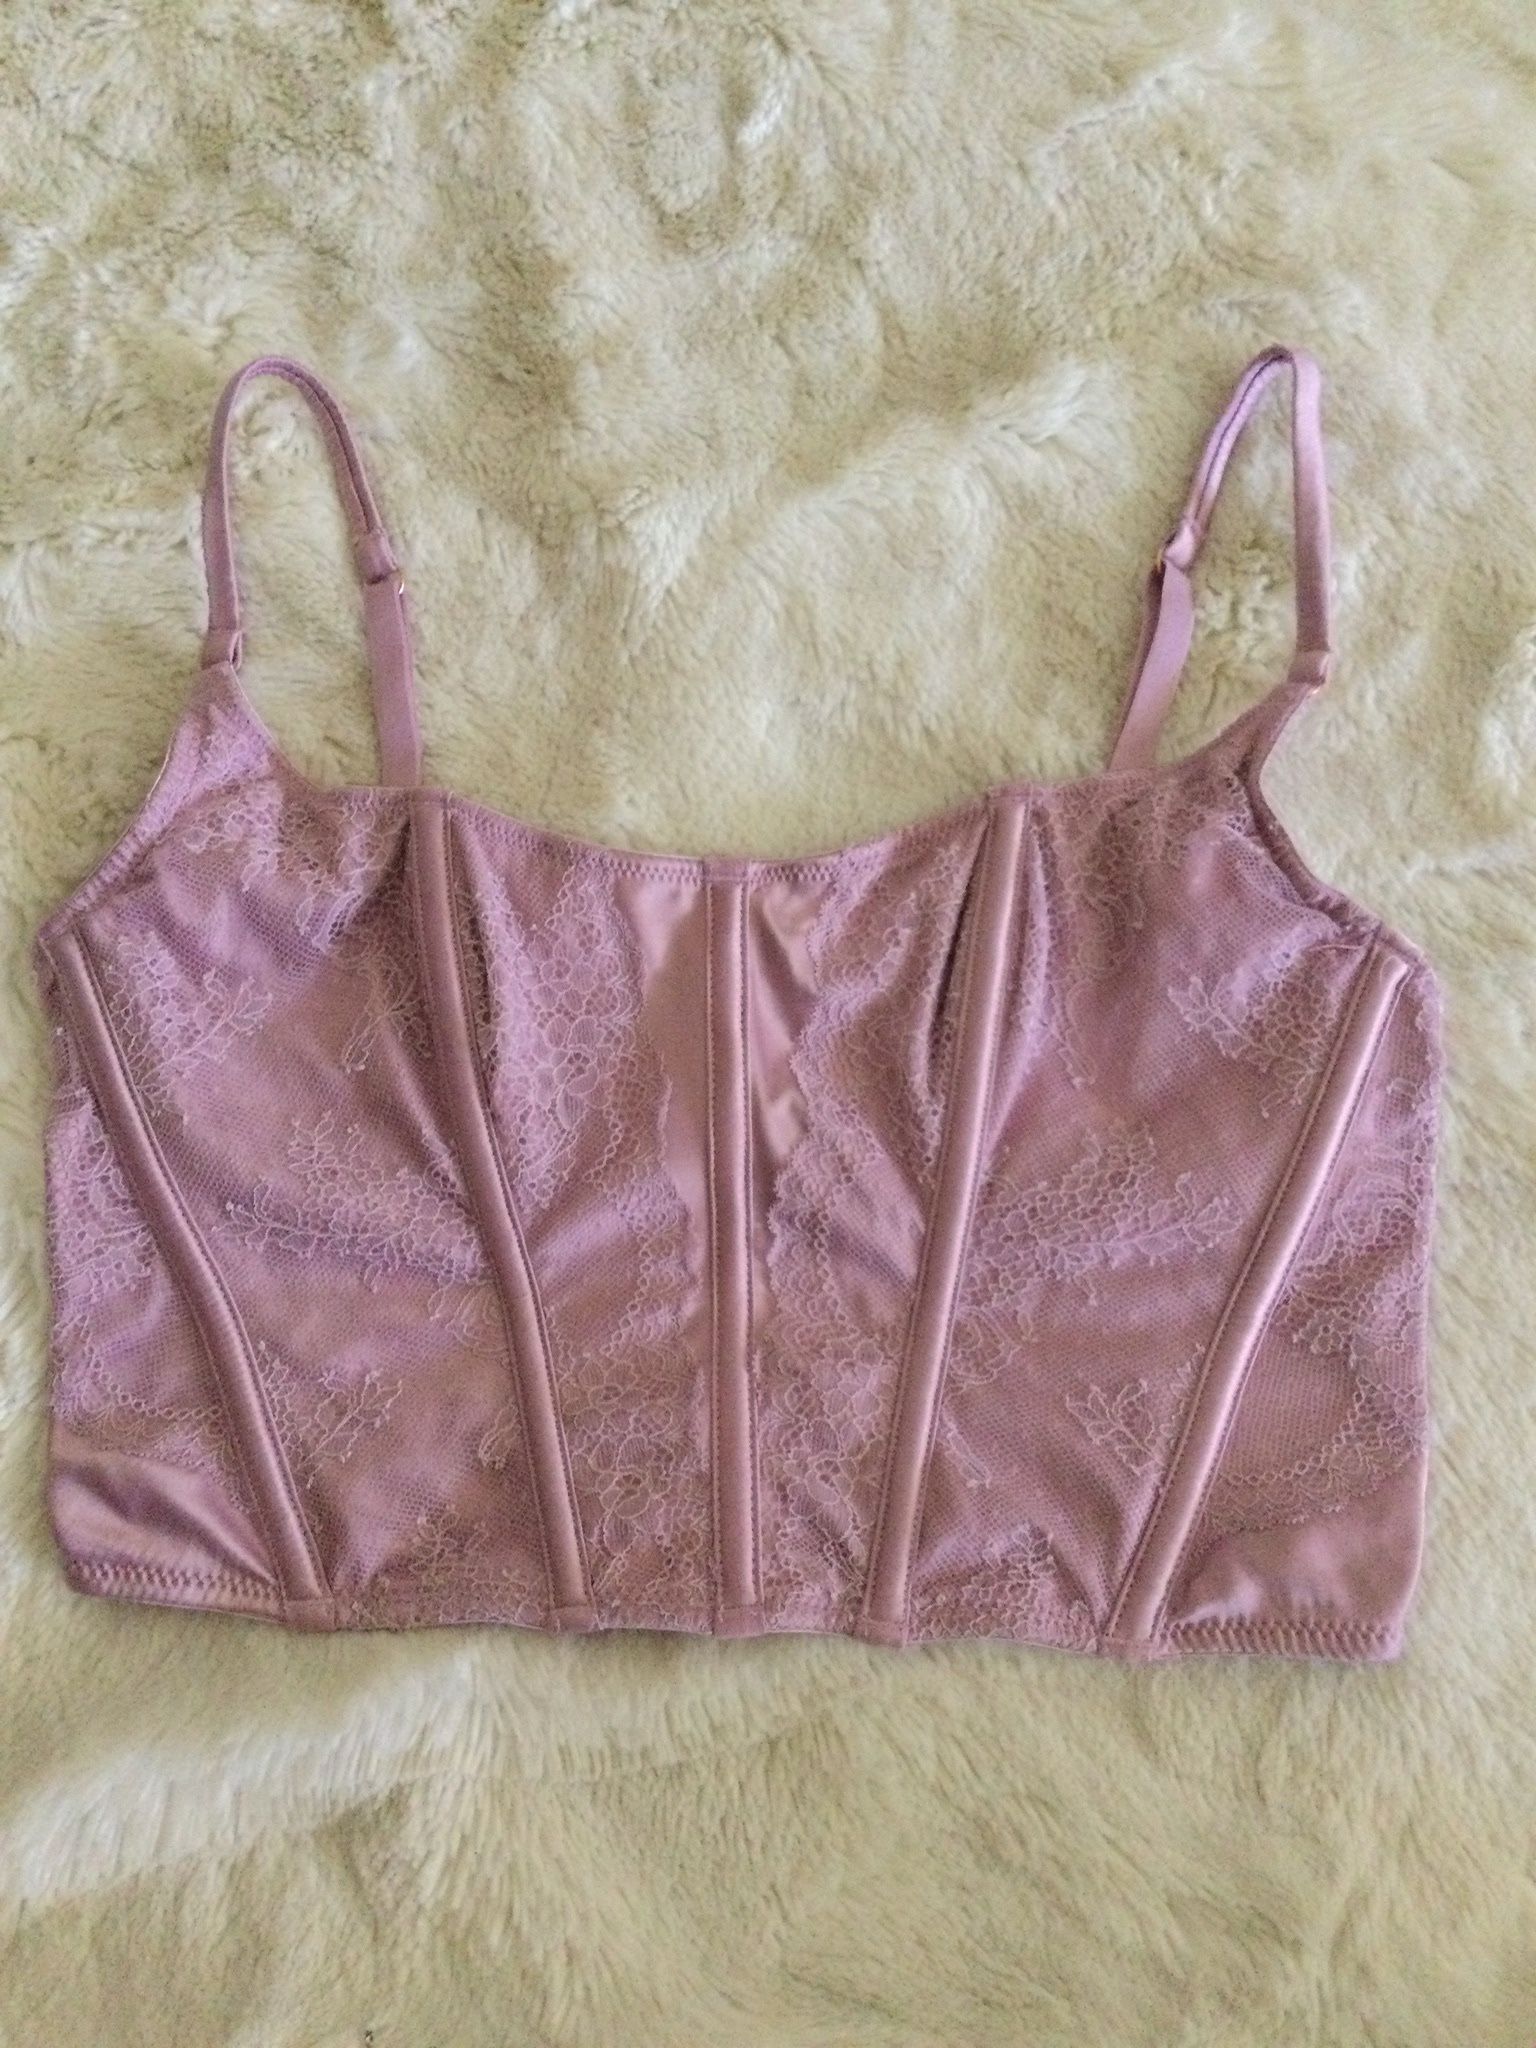 Primark pink lavender bustier corset bra top size medium